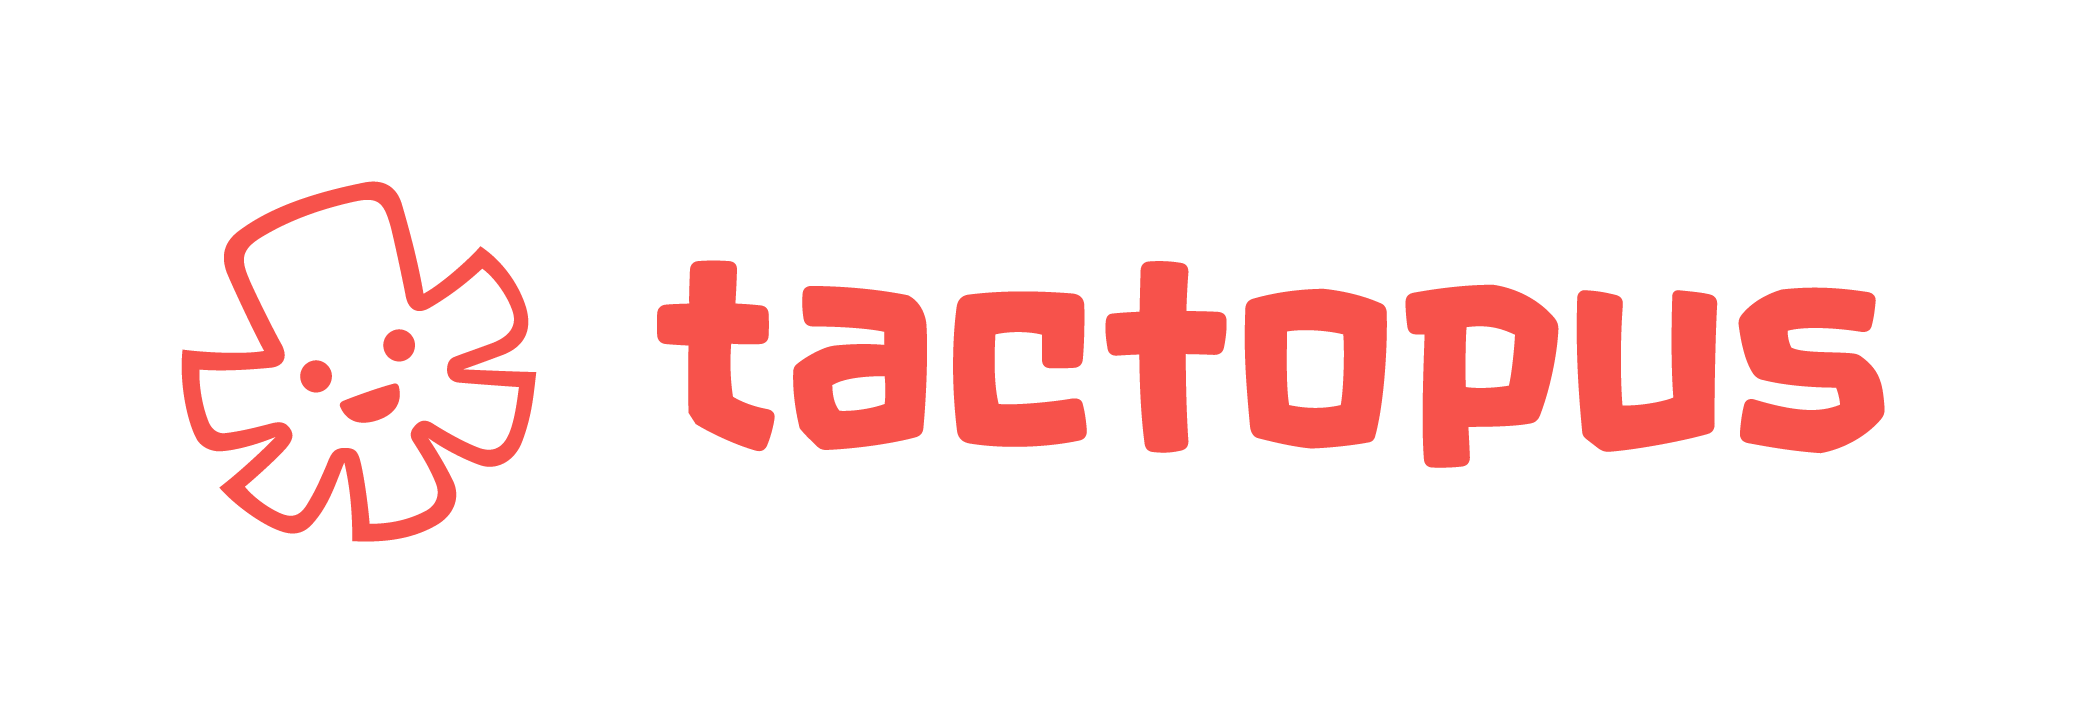 Tactopus brand's logo